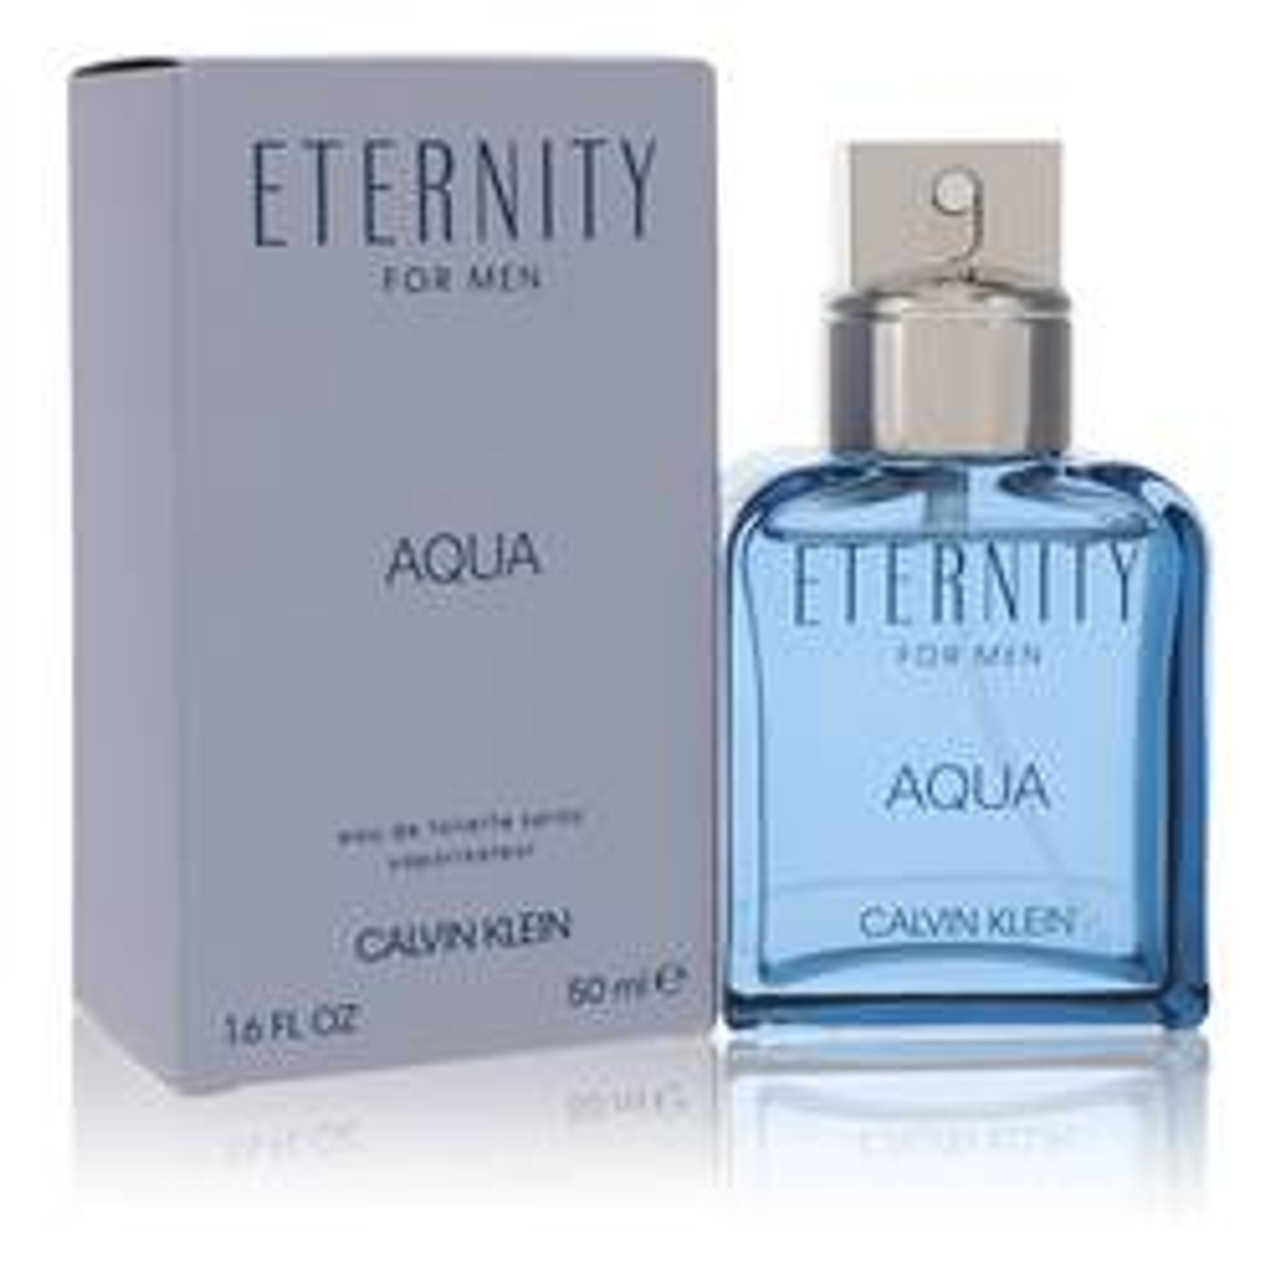 Eternity Aqua Cologne By Calvin Klein Eau De Toilette Spray 1.7 oz for Men - [From 71.00 - Choose pk Qty ] - *Ships from Miami